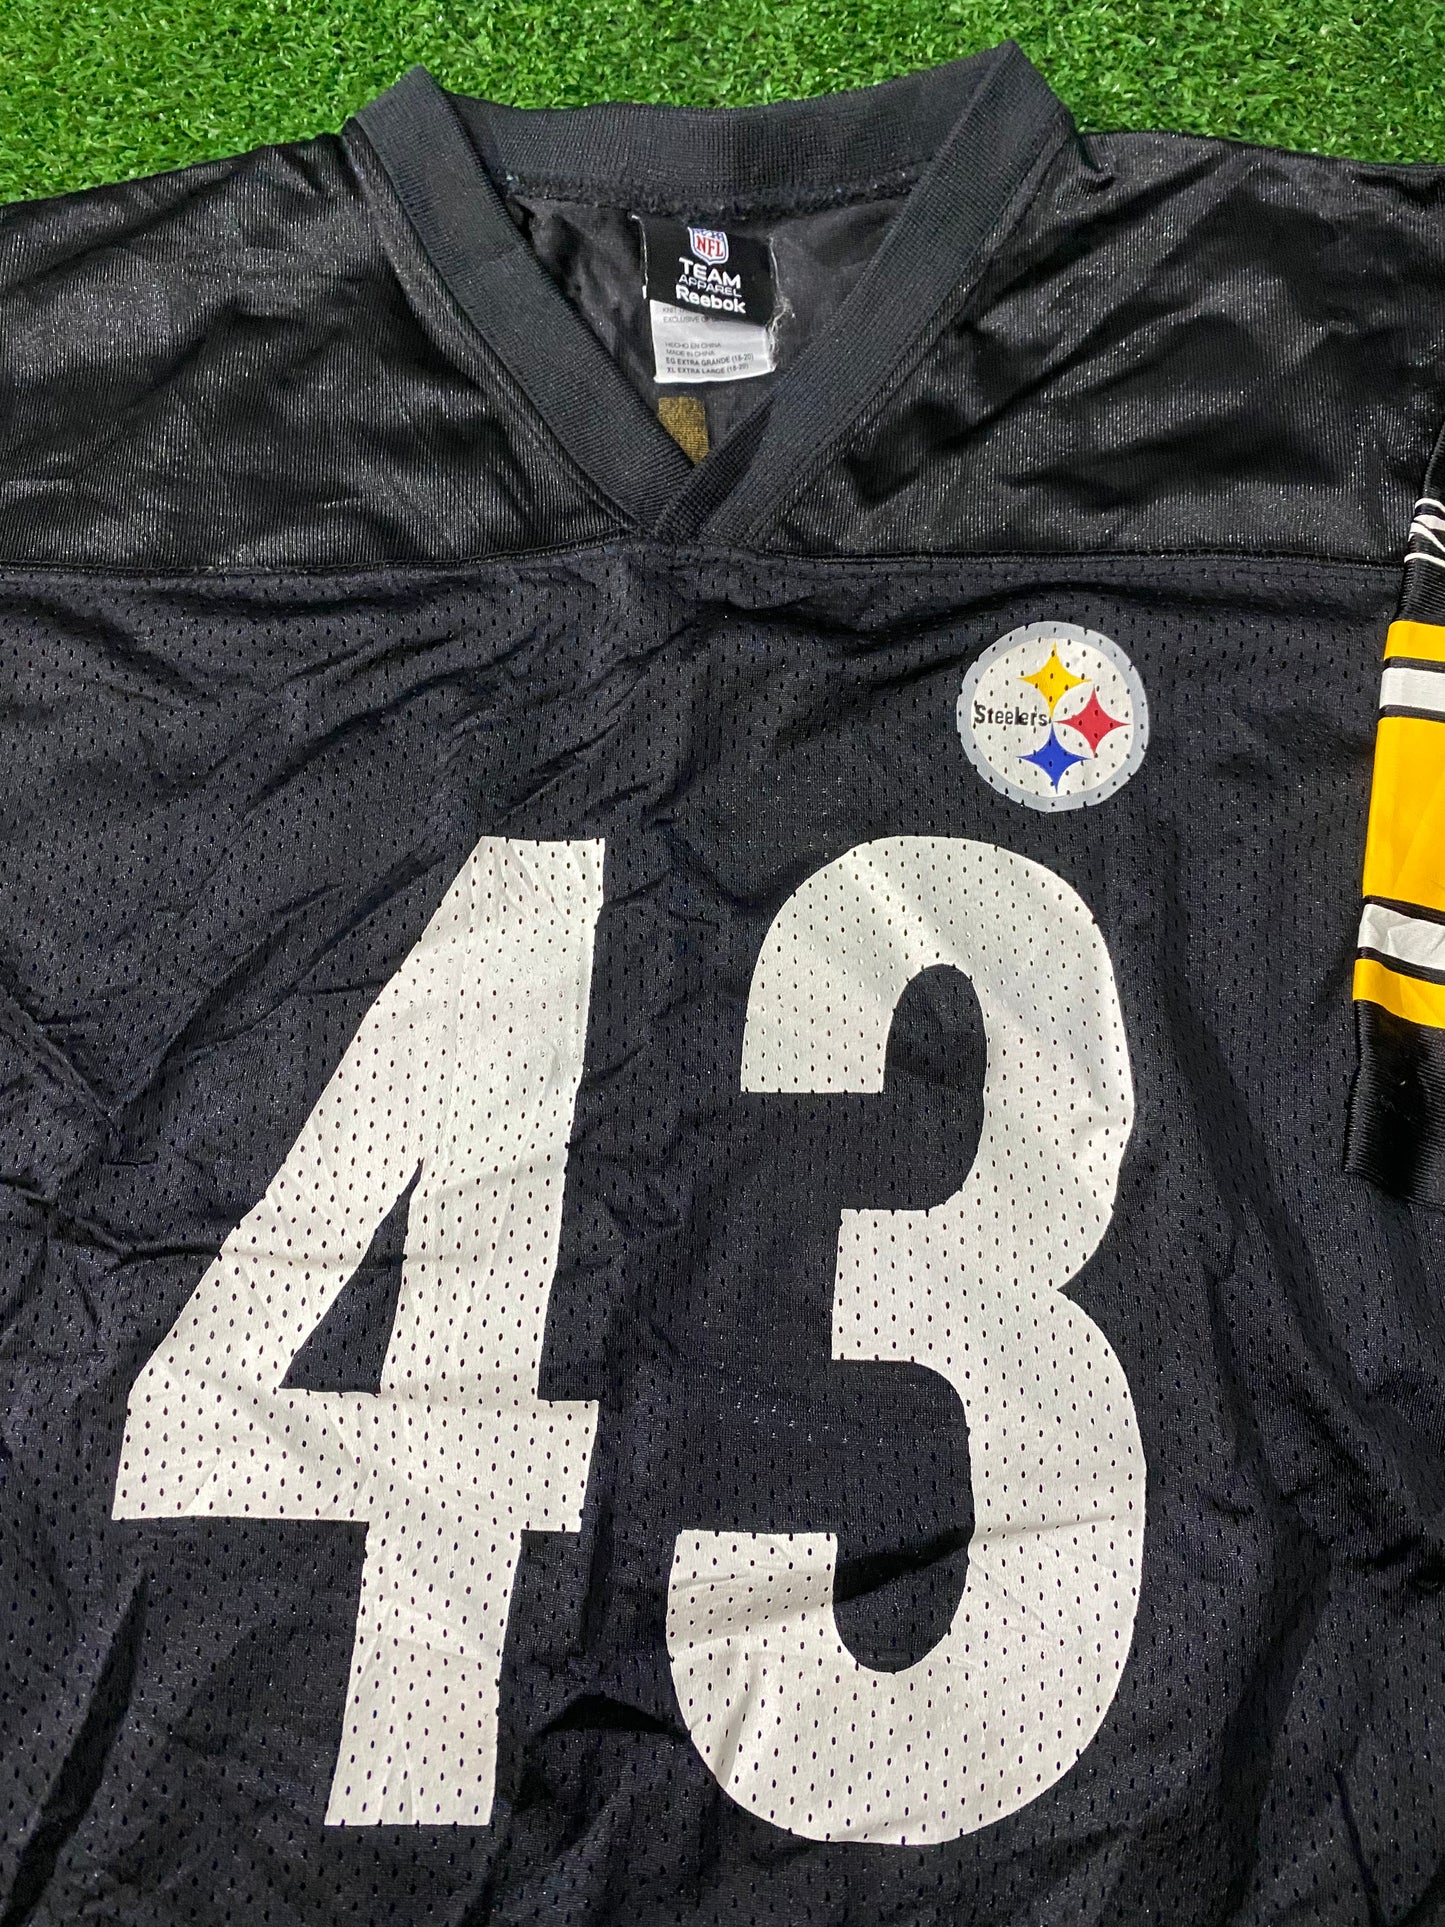 Pittsburgh Steelers USA NFL American Football Youths / Small Mans Polamalu no43 Reebok Jersey